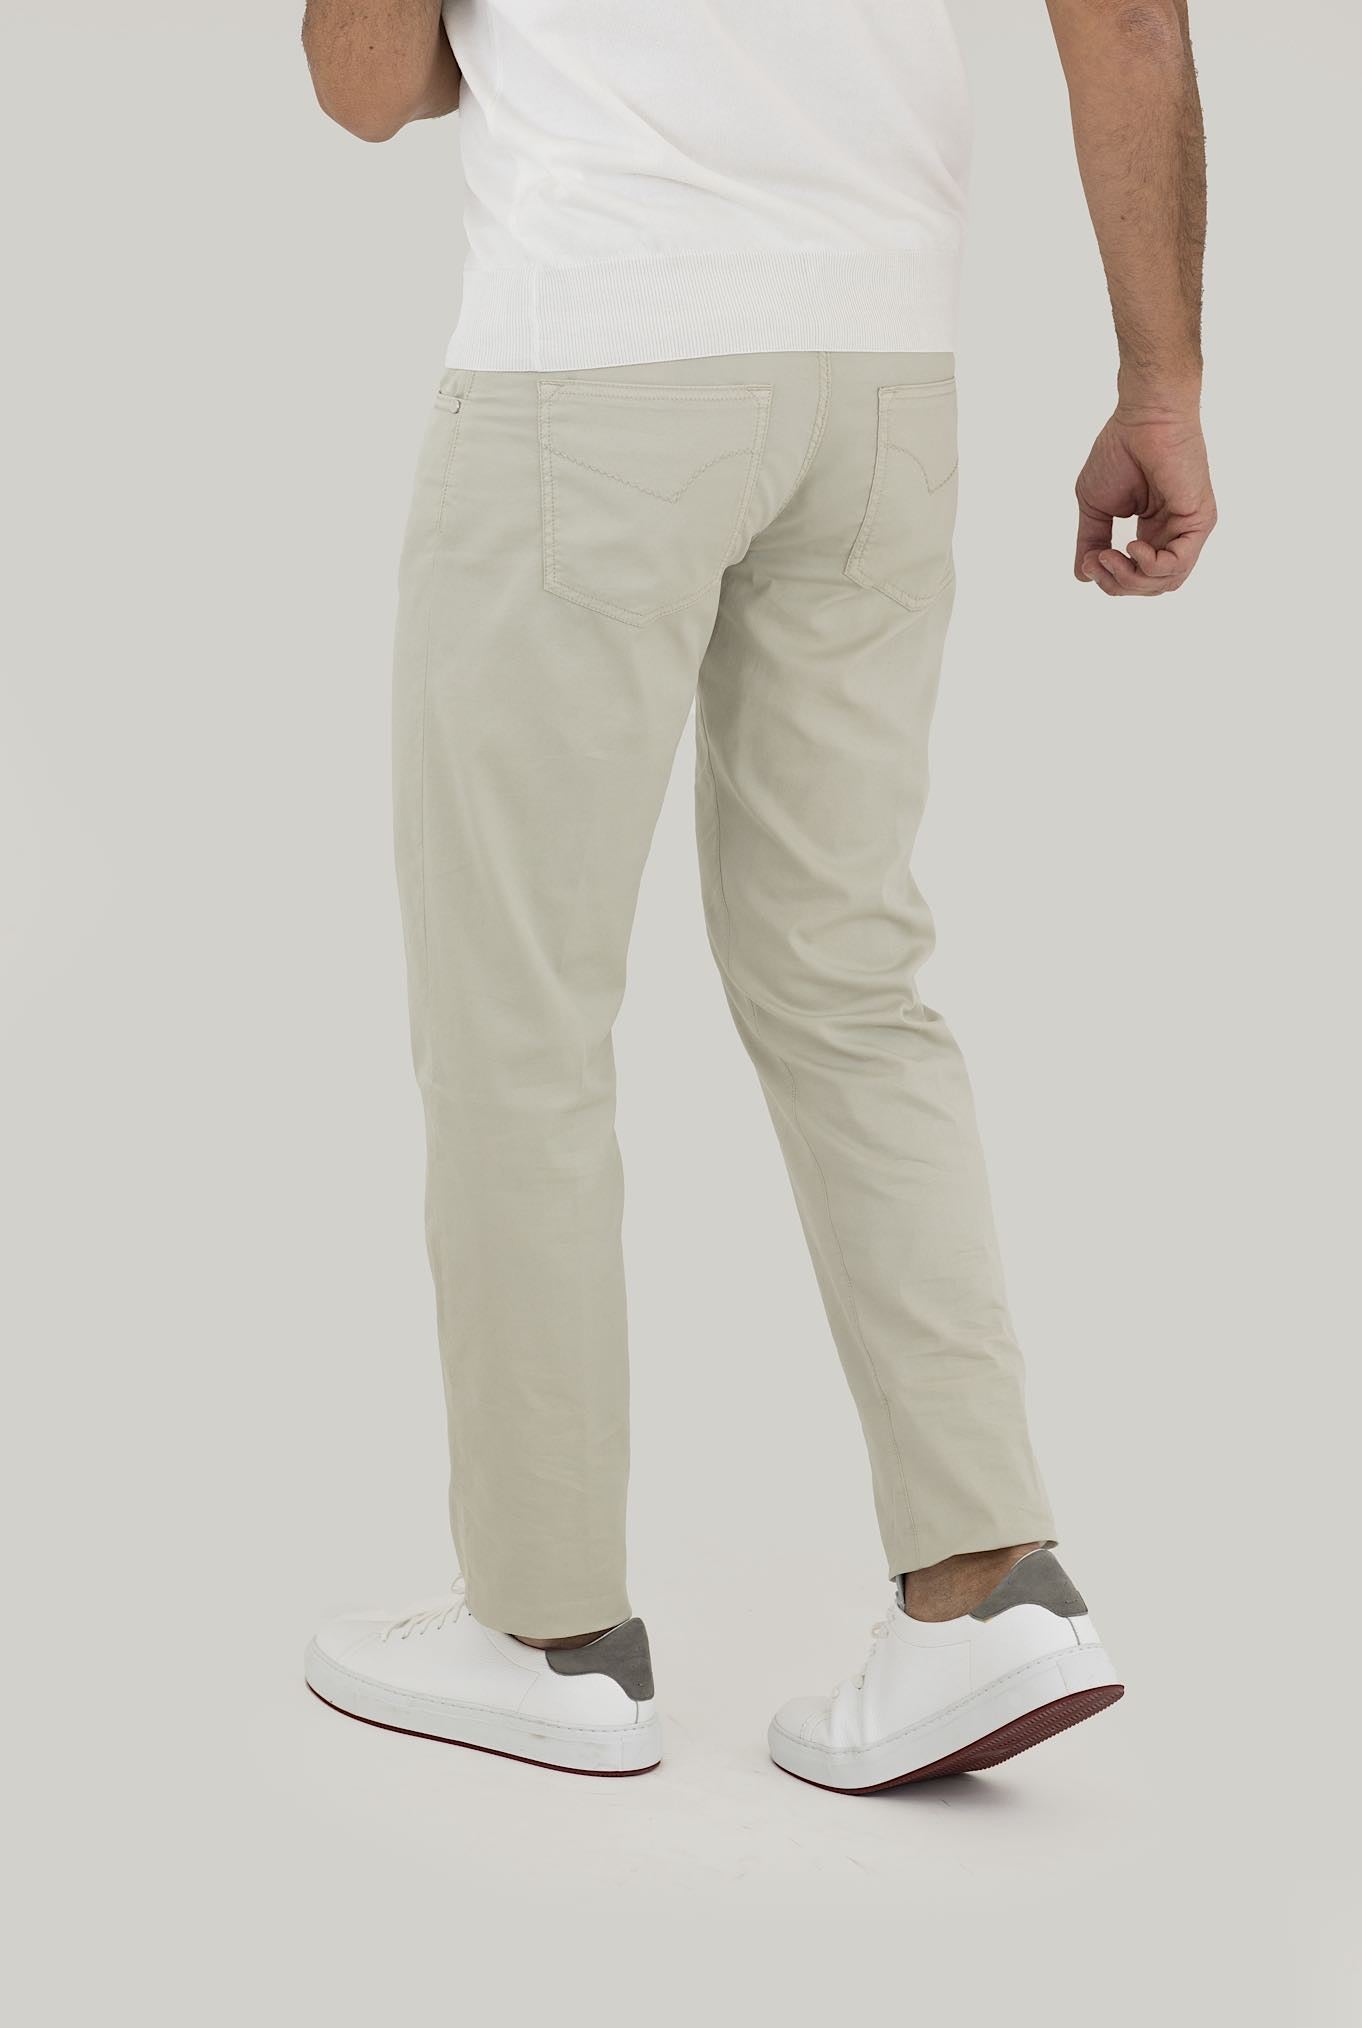 PESCAROLO 5 Pocket Trousers mod. Nerano Cotton Silk Beige